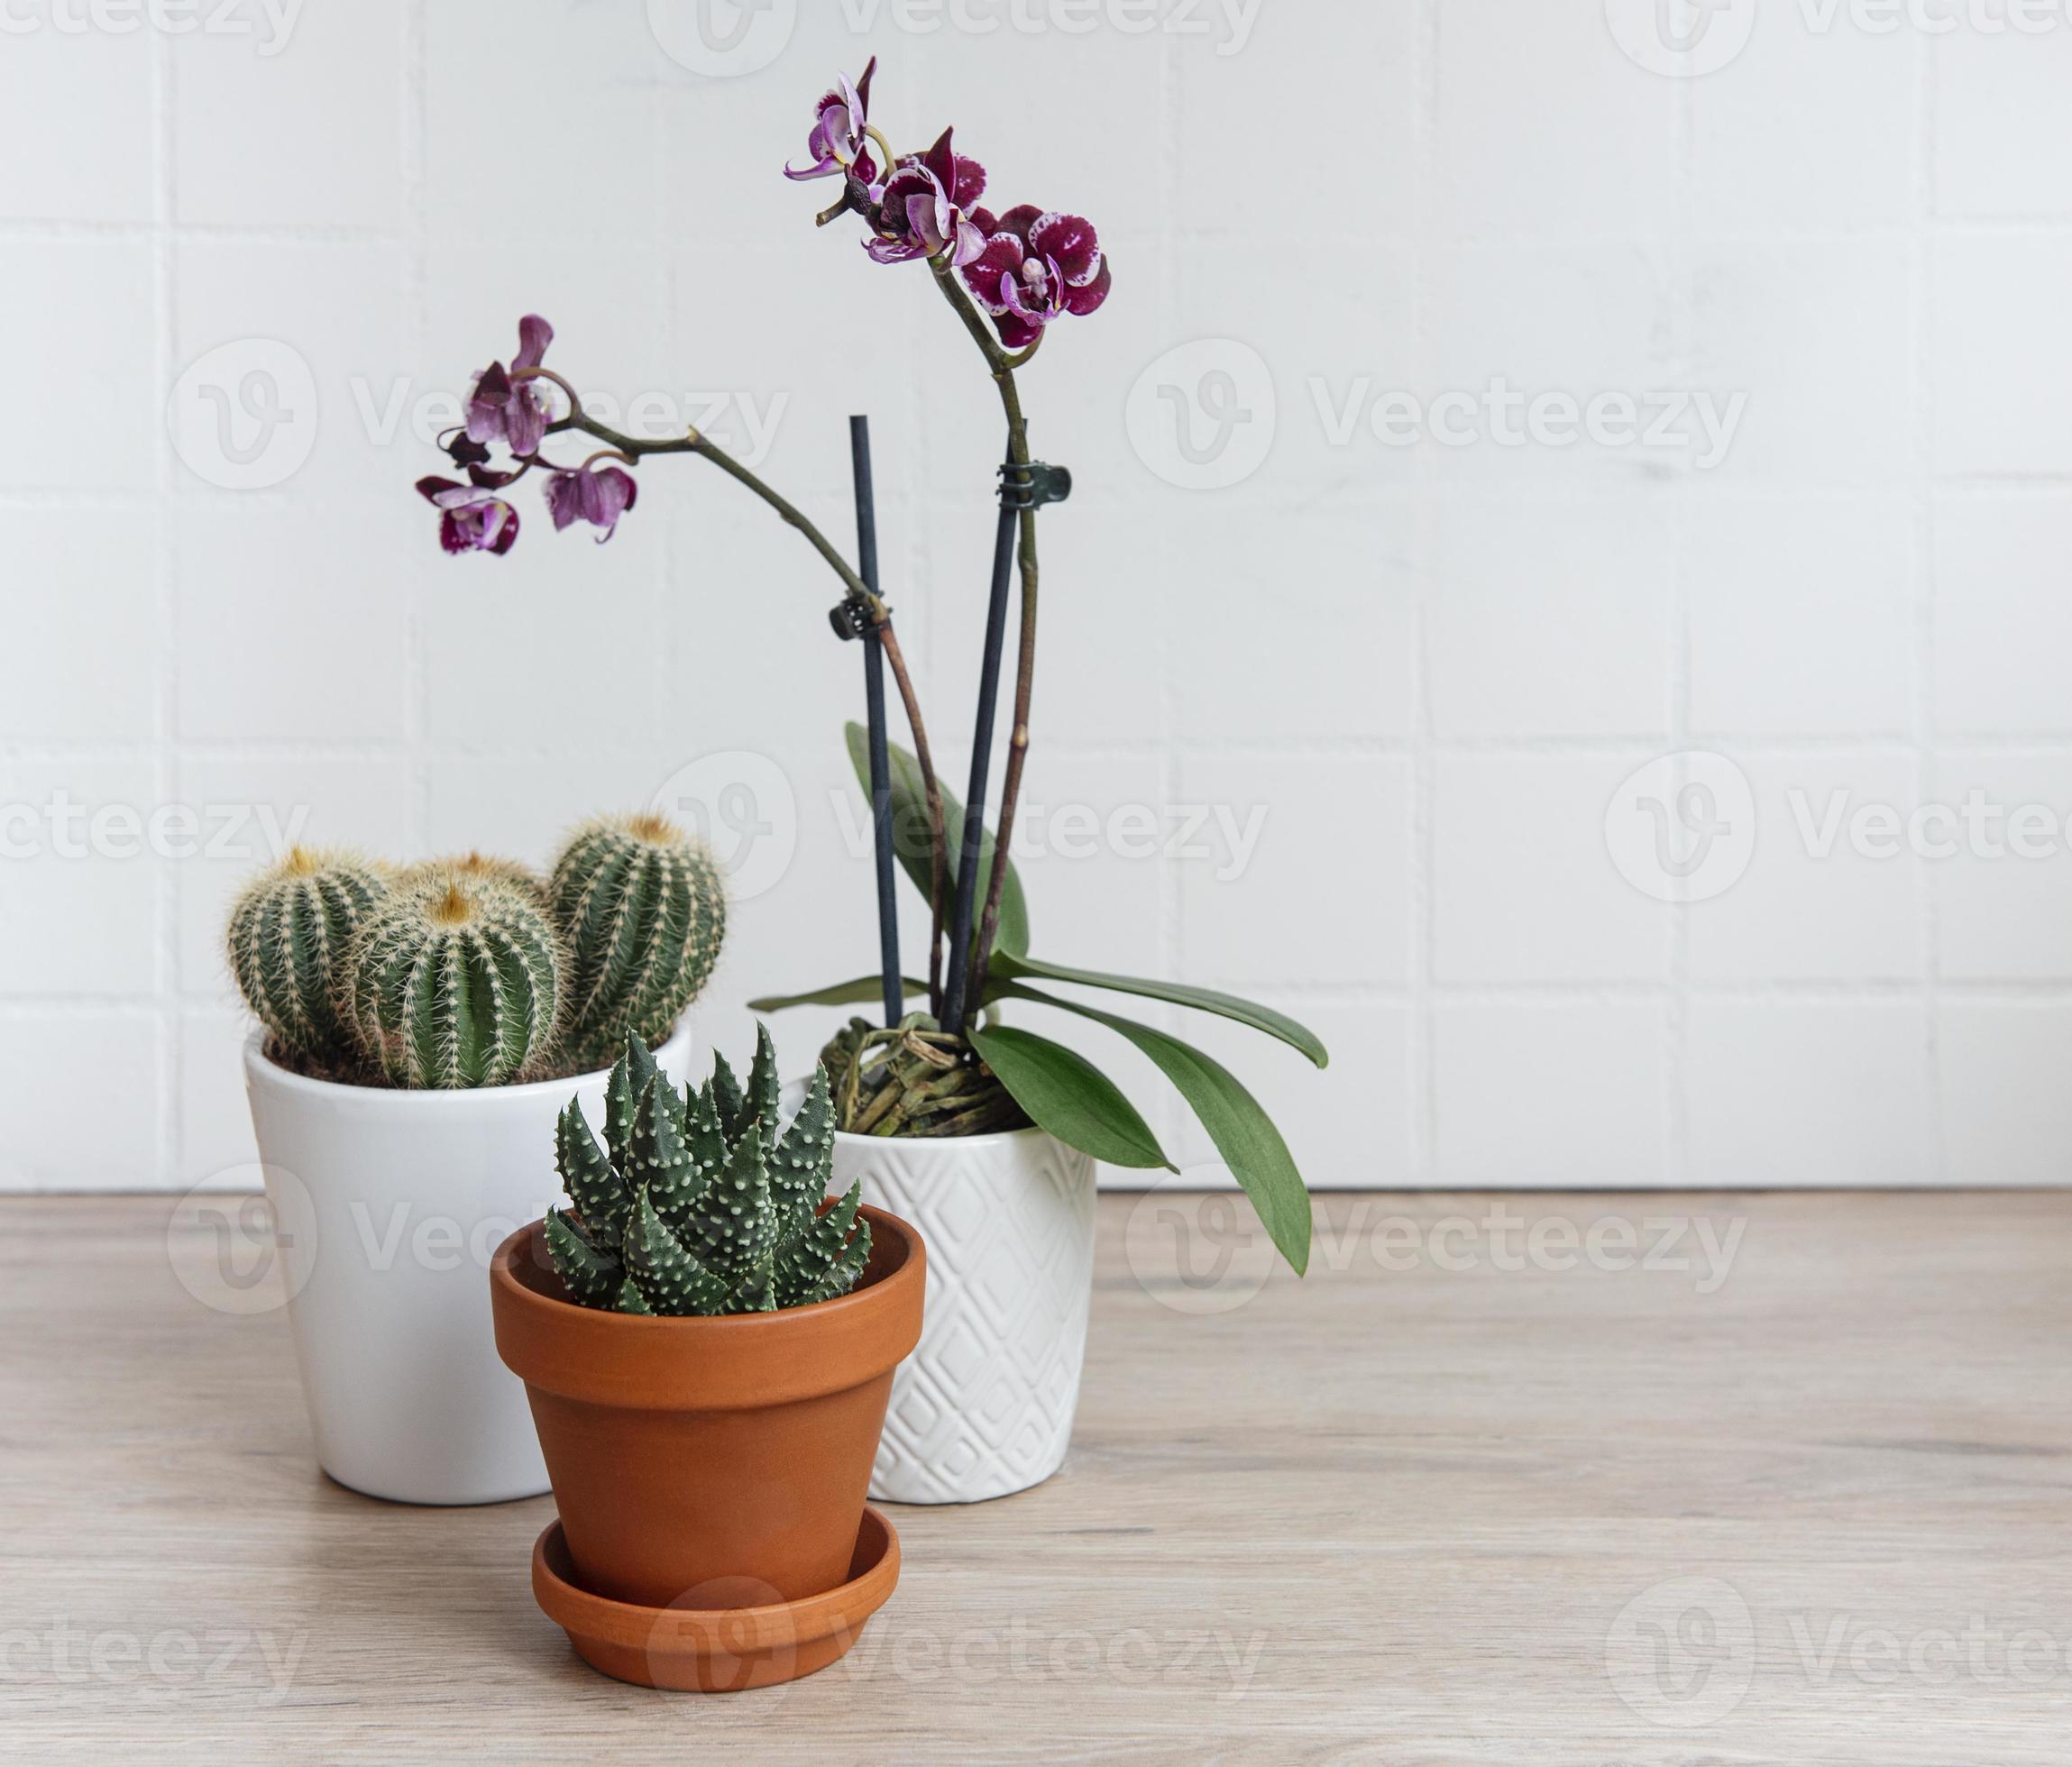 cactos, flores de orquídea e plantas suculentas em vasos sobre a mesa  2702361 Foto de stock no Vecteezy